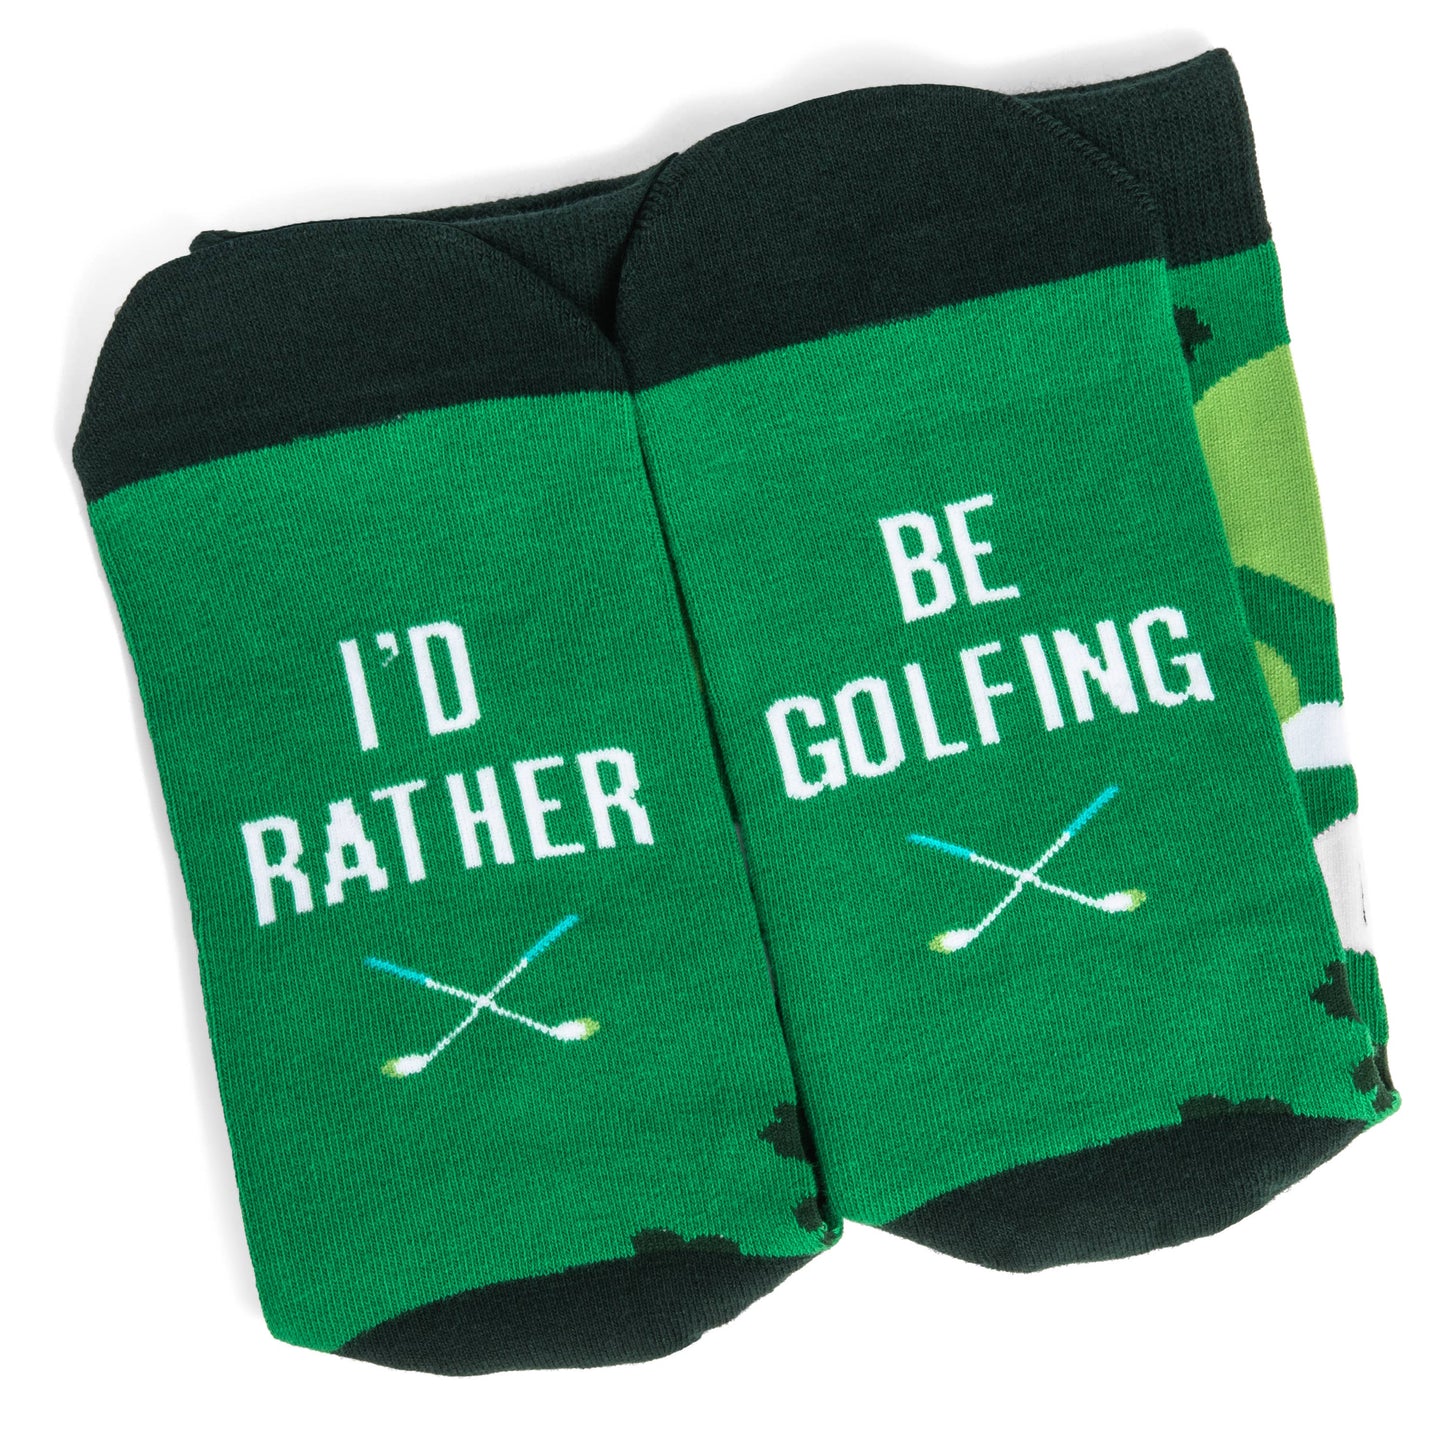 Lavley - I'd Rather Be Golfing Socks